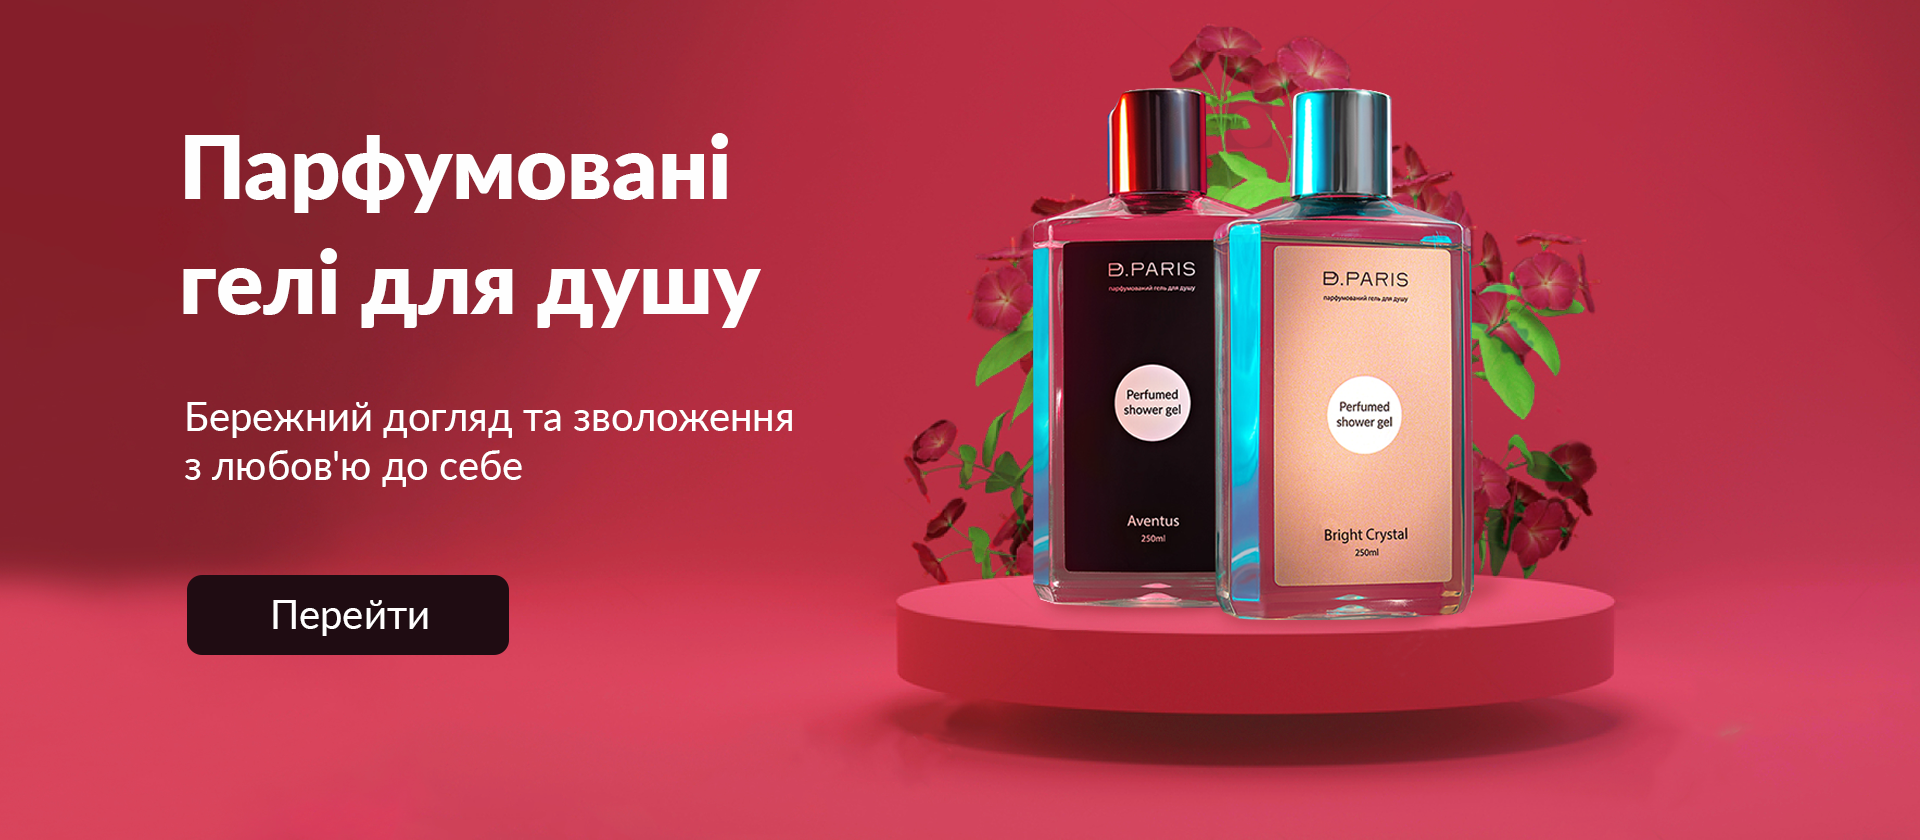 Beautydepot Ru Интернет Магазин Парфюмерии Купить Духи